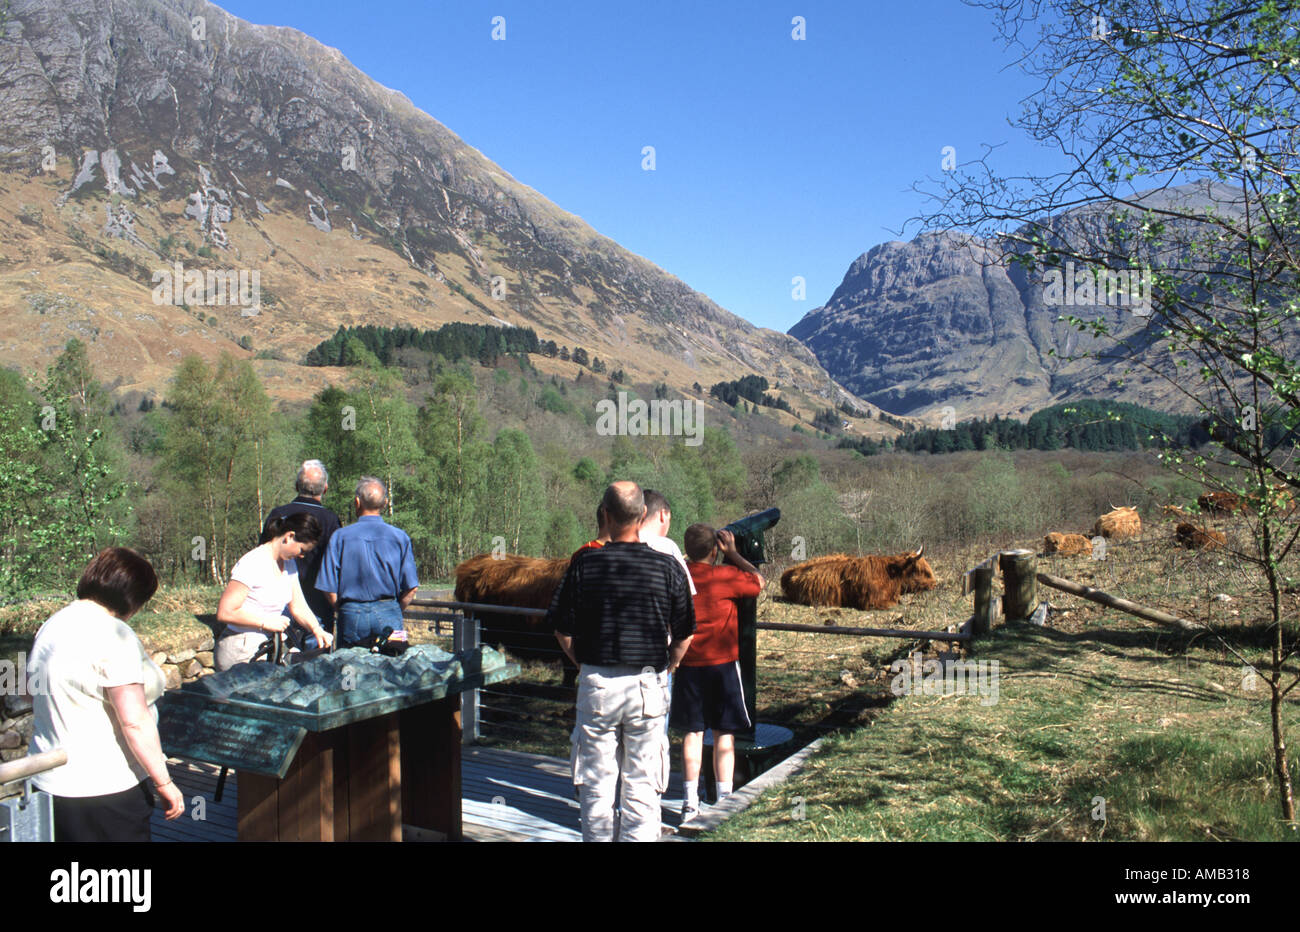 Viewing platform at National Trust for Scotland visitor centre near Glencoe village in Glen Coe Scotland Stock Photo